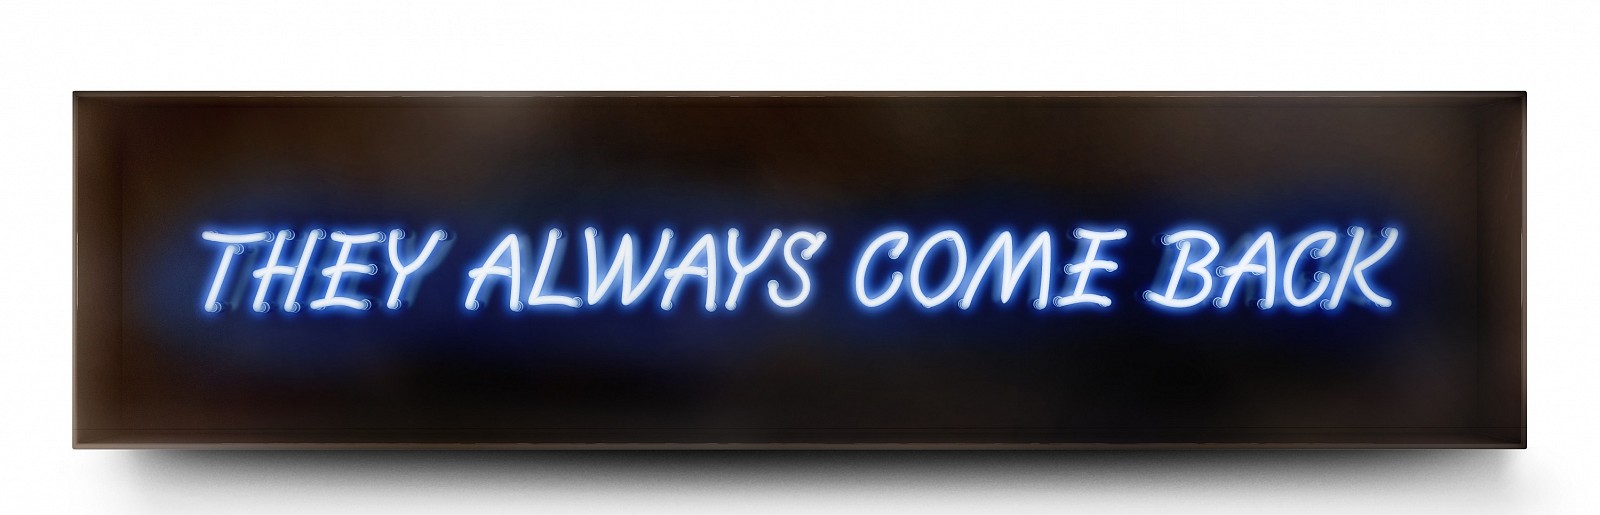 David Drebin, They Always Come Back, 2014
Neon Light Installation, 15.5 x 60.5 x 7.5 inches